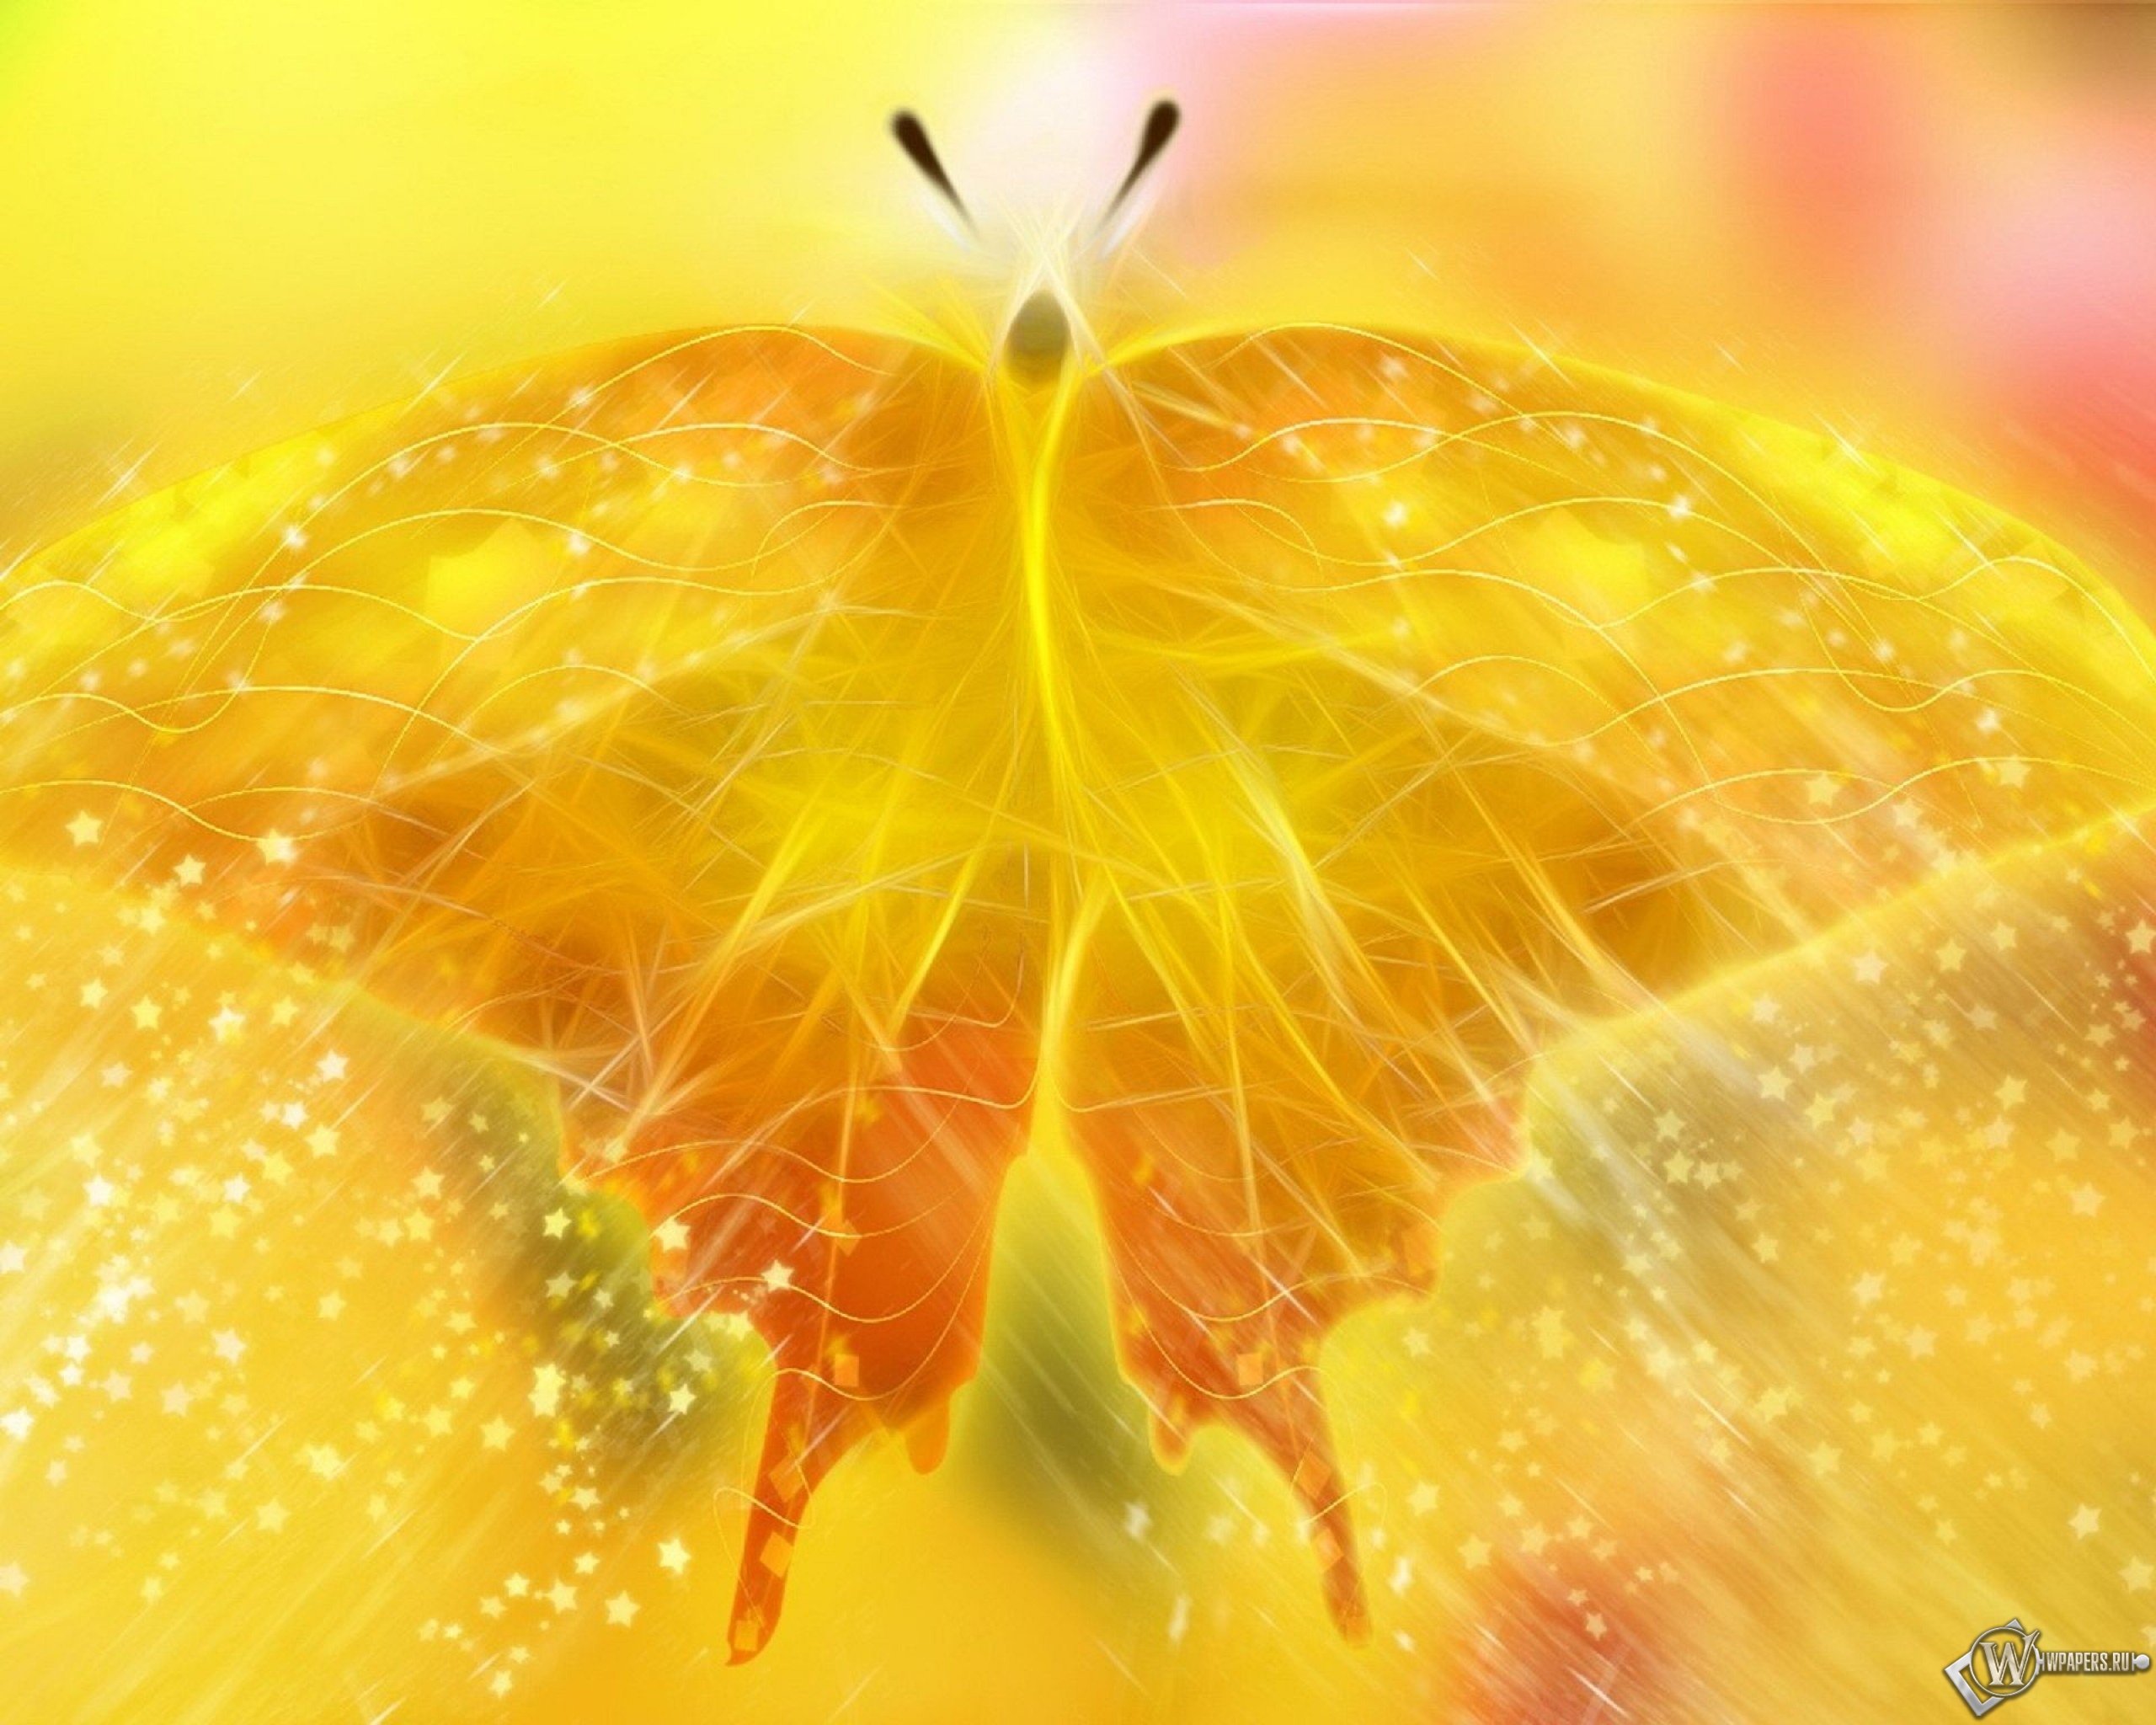 Пыльца сердце. Желтые обои. Жёлтая бабочка. Цветотерапия желтый цвет. Бабочка в лучах солнца.